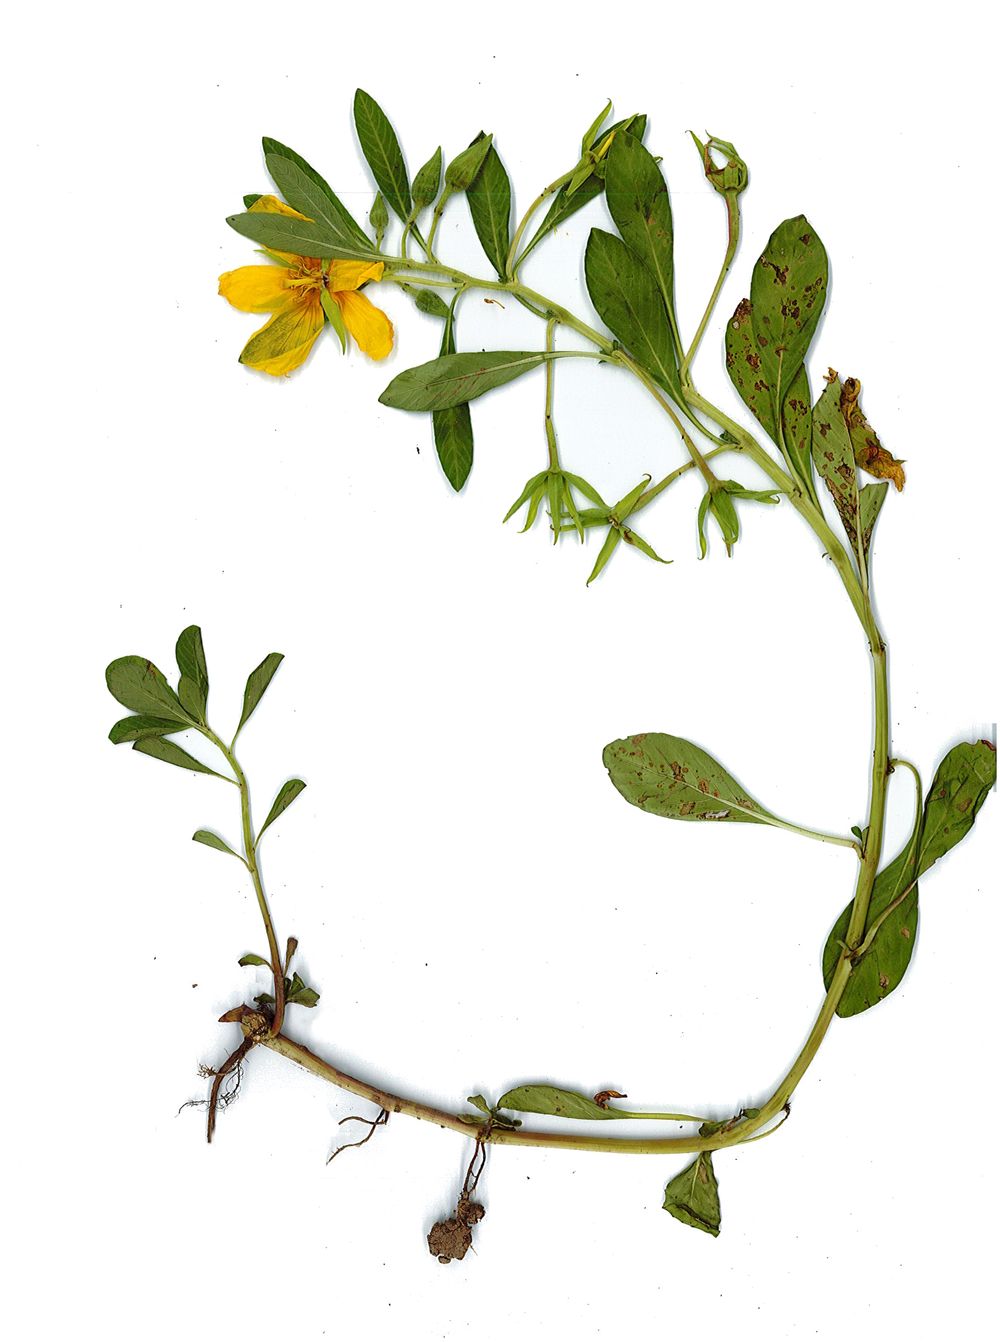 Ludwigia grandiflora (Michx.) Greuter & Burdet, 1987 [Ludwigia grandiflora subsp. hexapetala (Hook. & Arn.) G.L.Nesom & Kartesz, 2000]